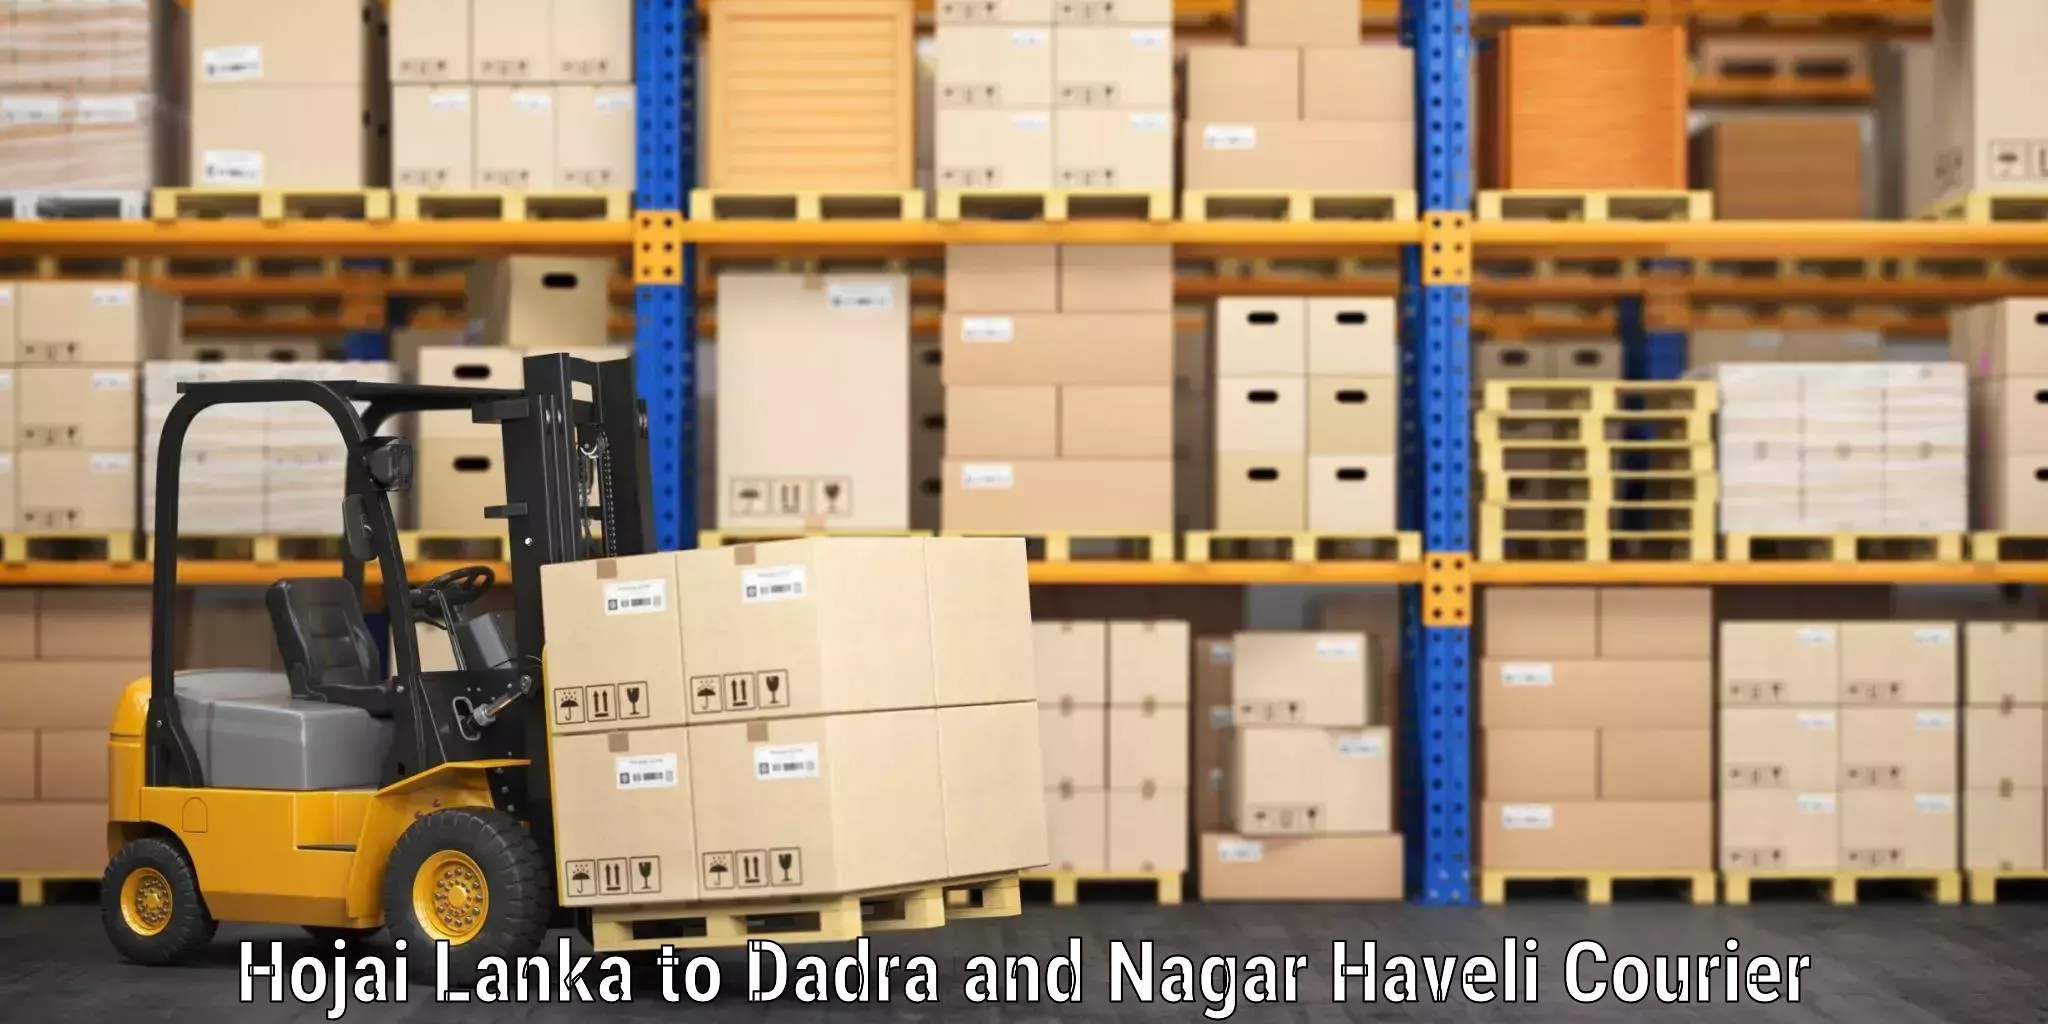 Long distance luggage transport Hojai Lanka to Dadra and Nagar Haveli